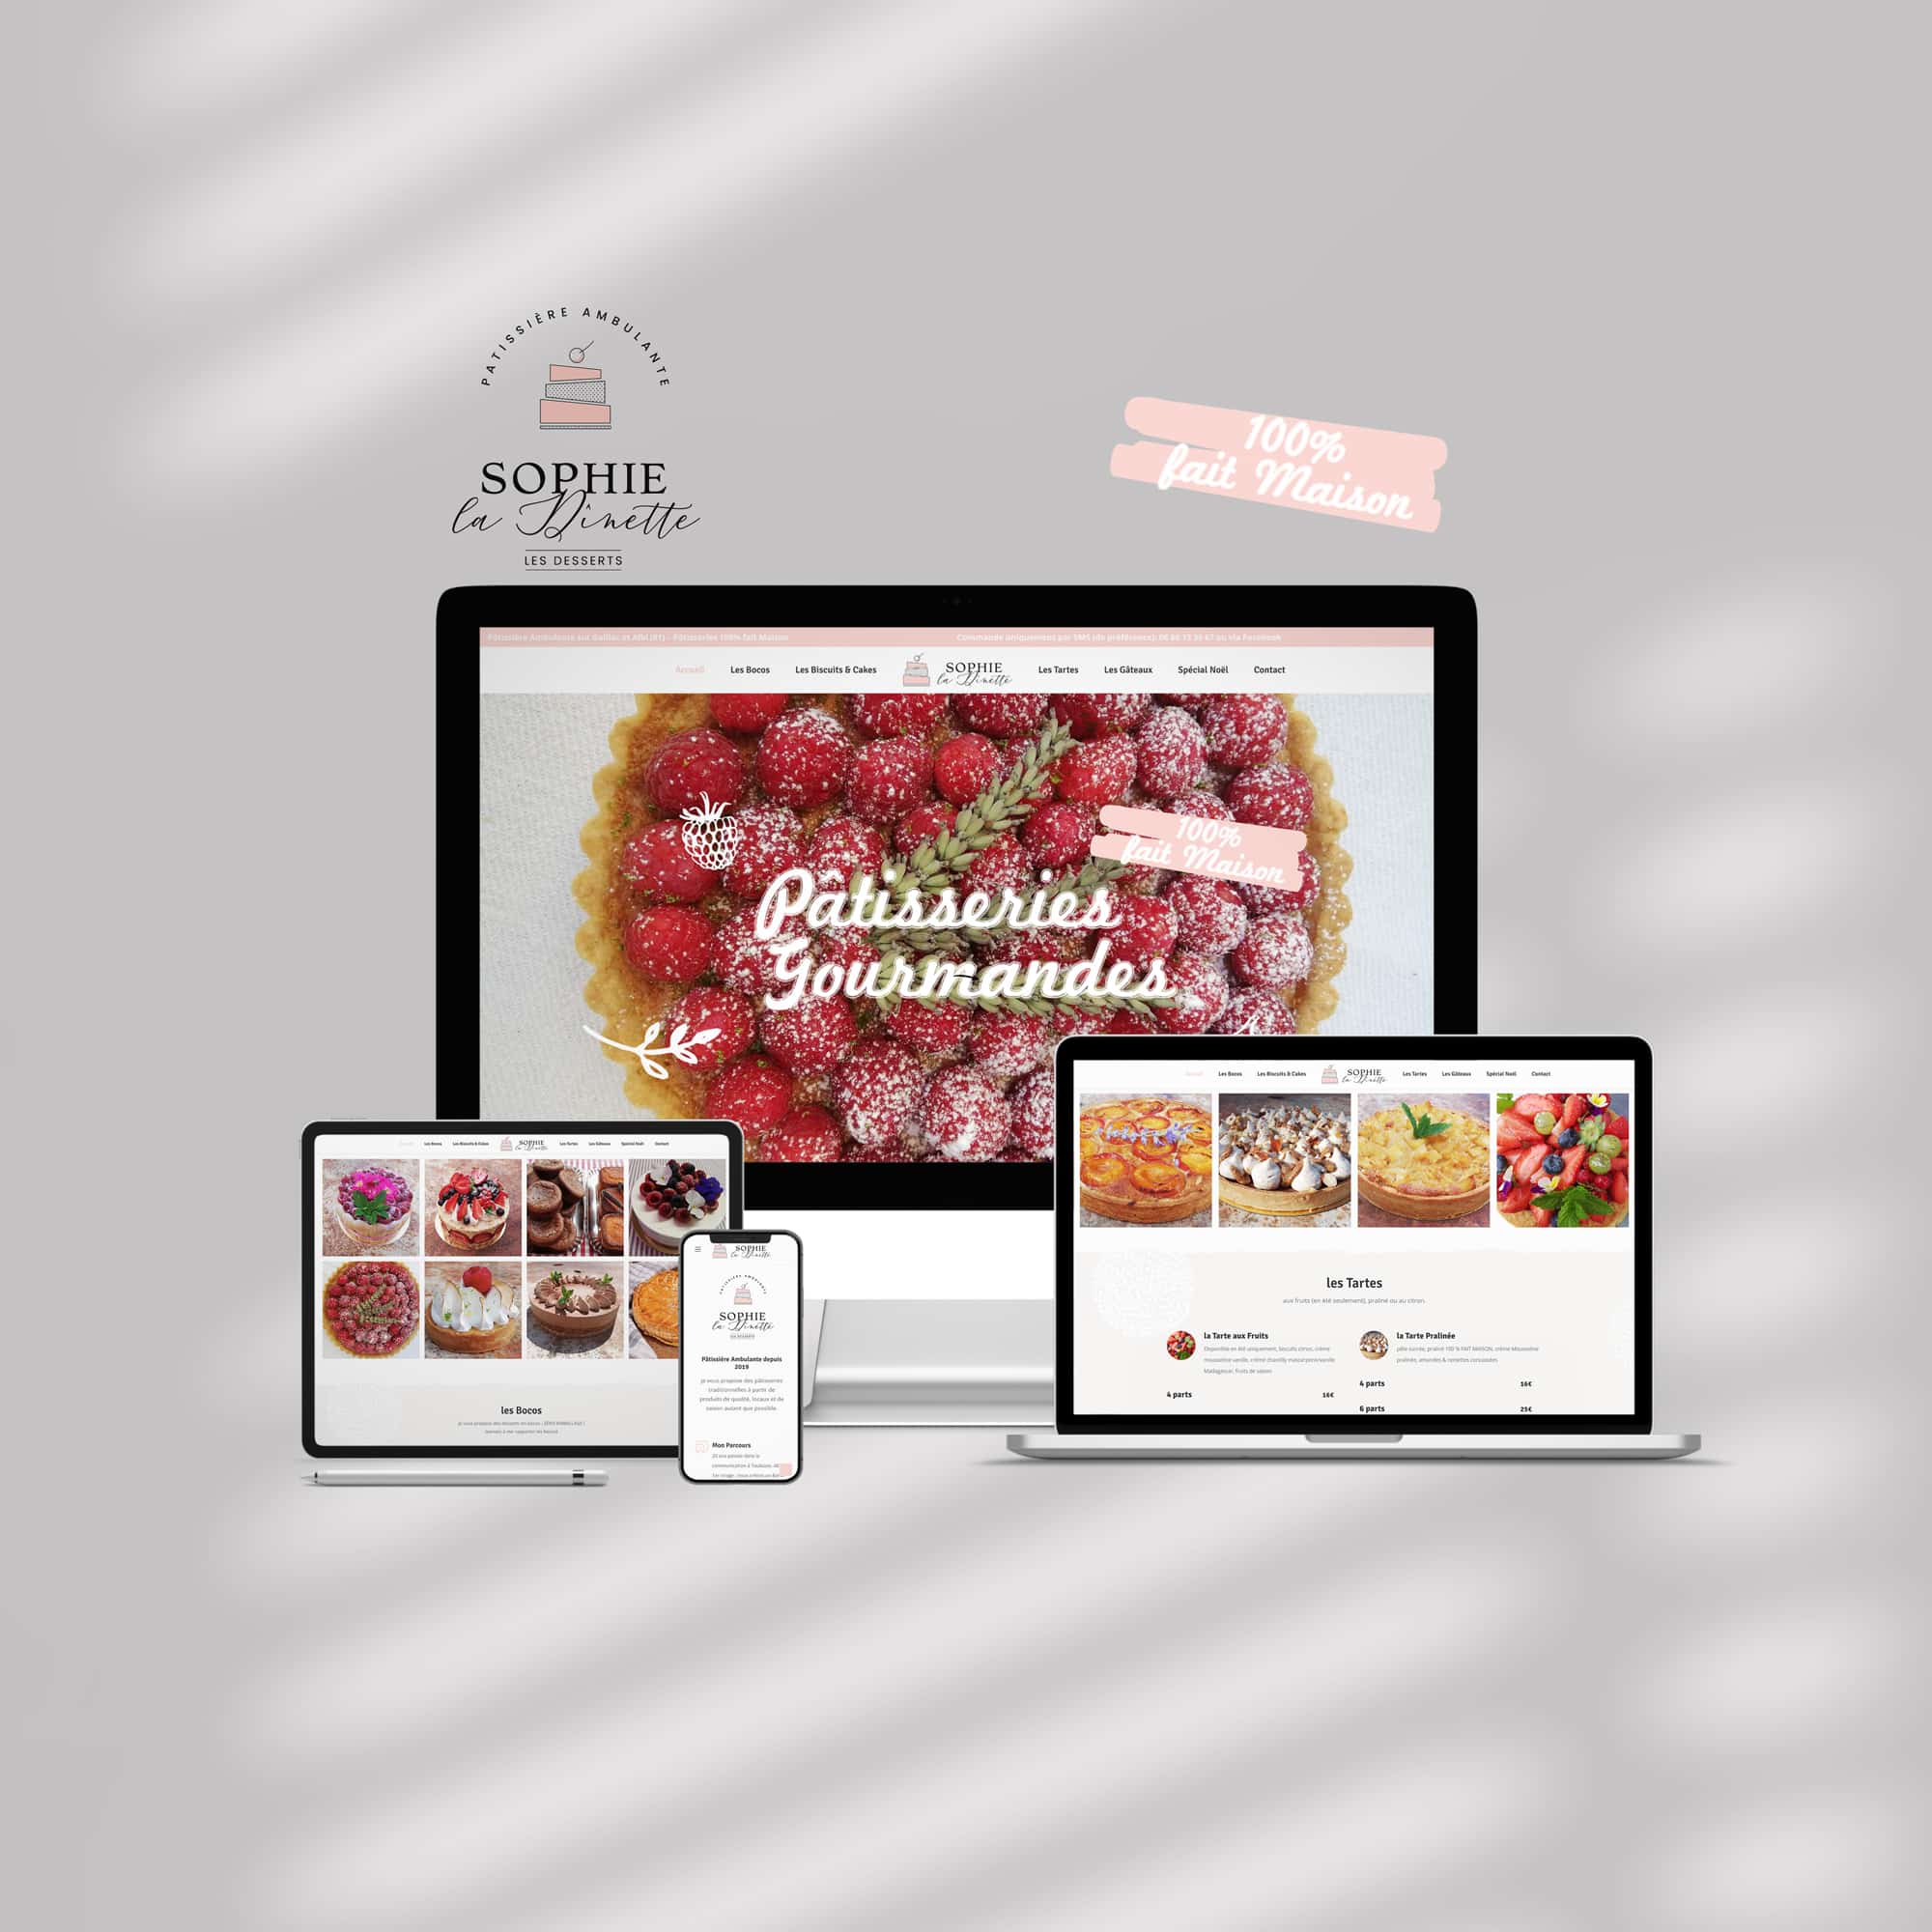 Création site web sophie la dinette pâtisserie restaurant france albi Tarn